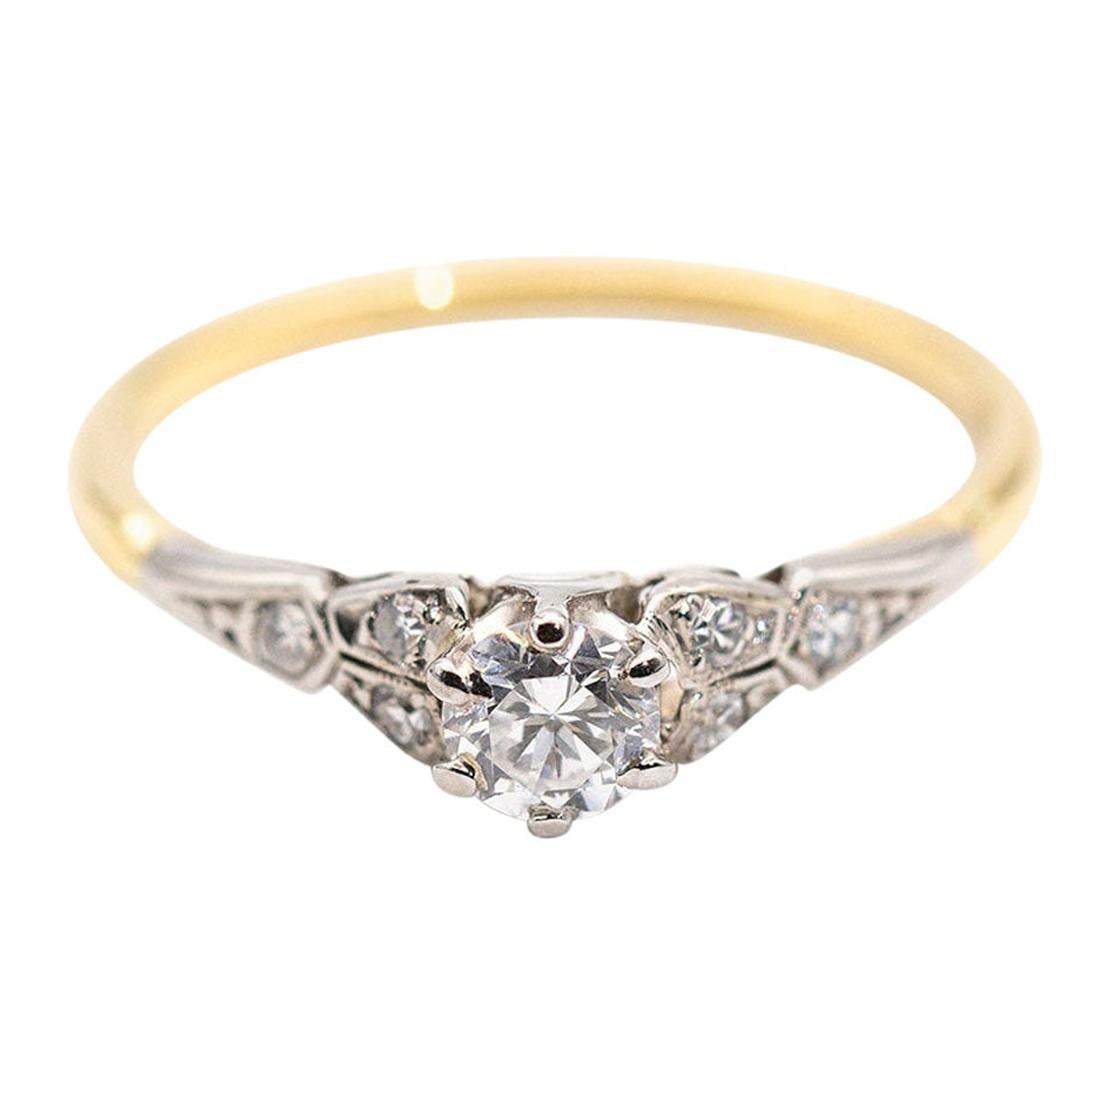 0.32 Carats of Round Diamonds 18 Carat Gold Vintage Engagement Ring